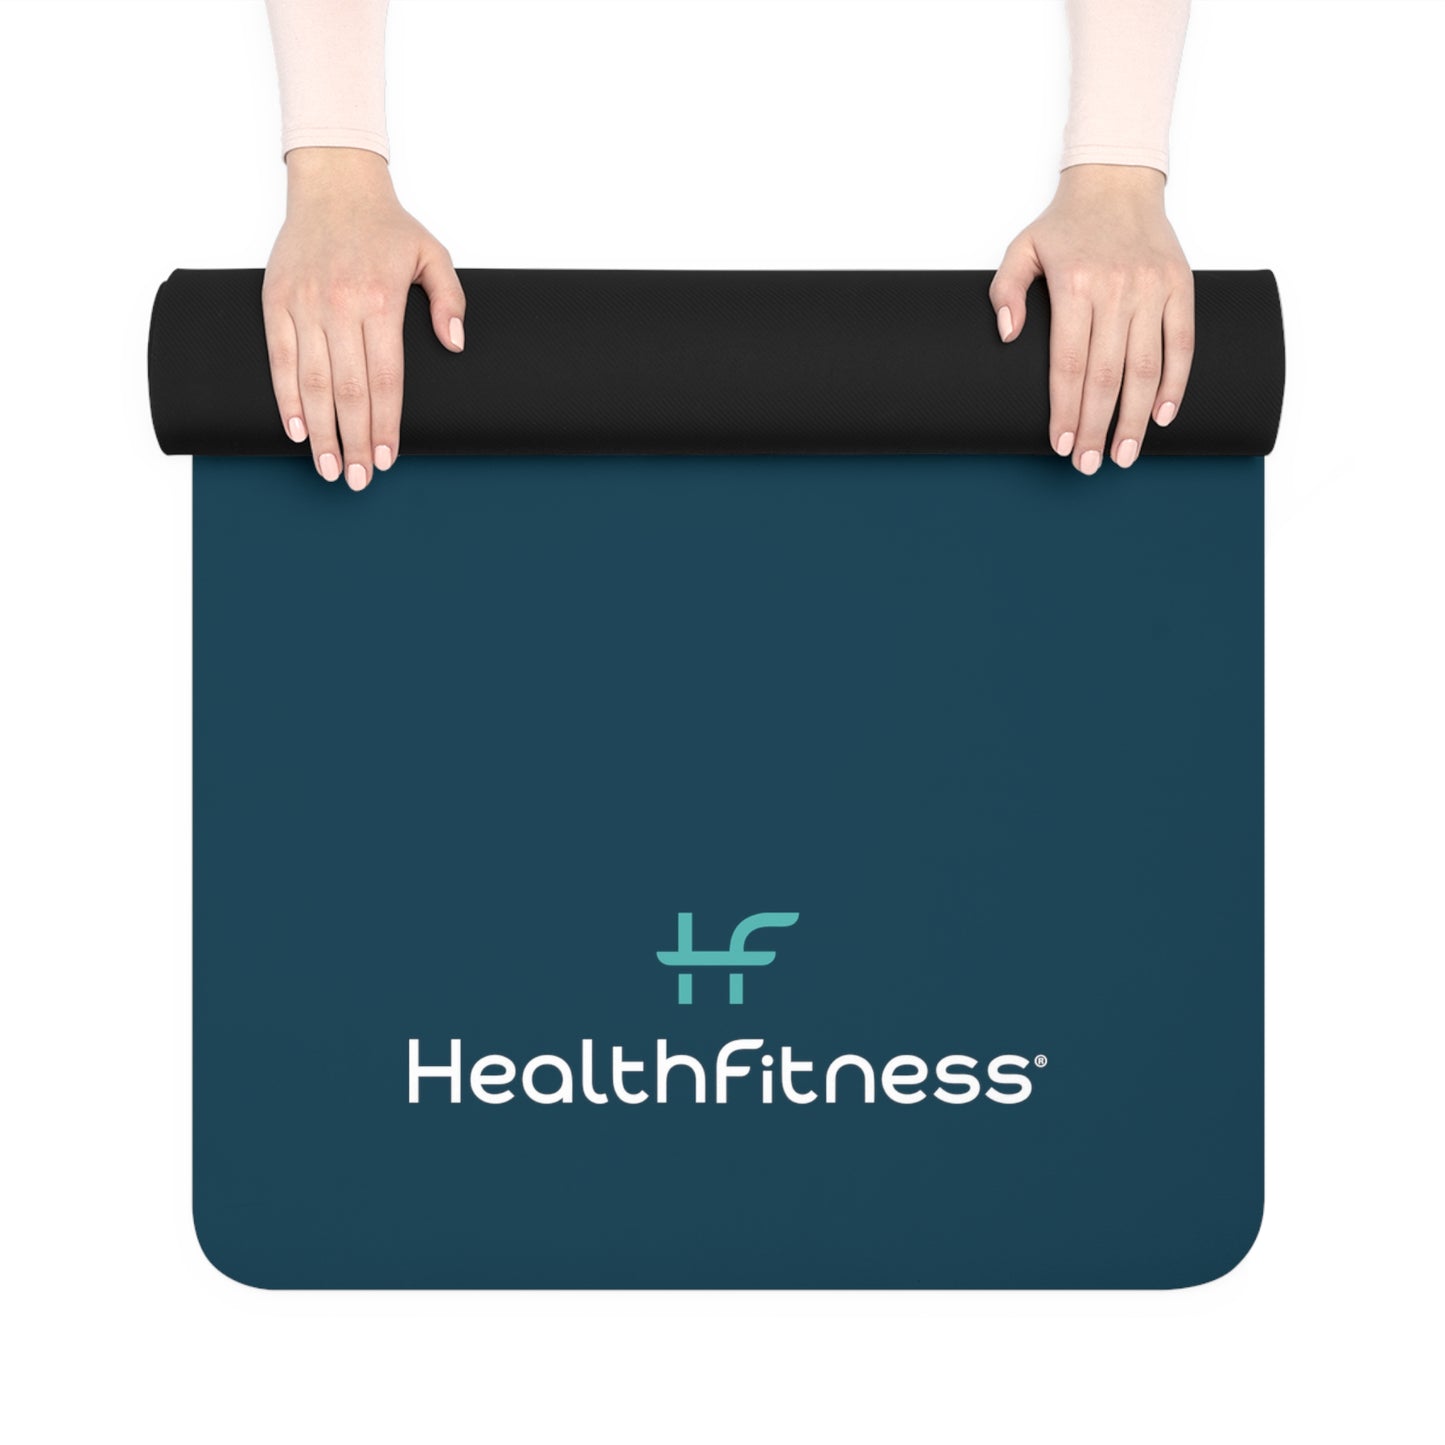 HealthFitness Rubber Yoga Mat